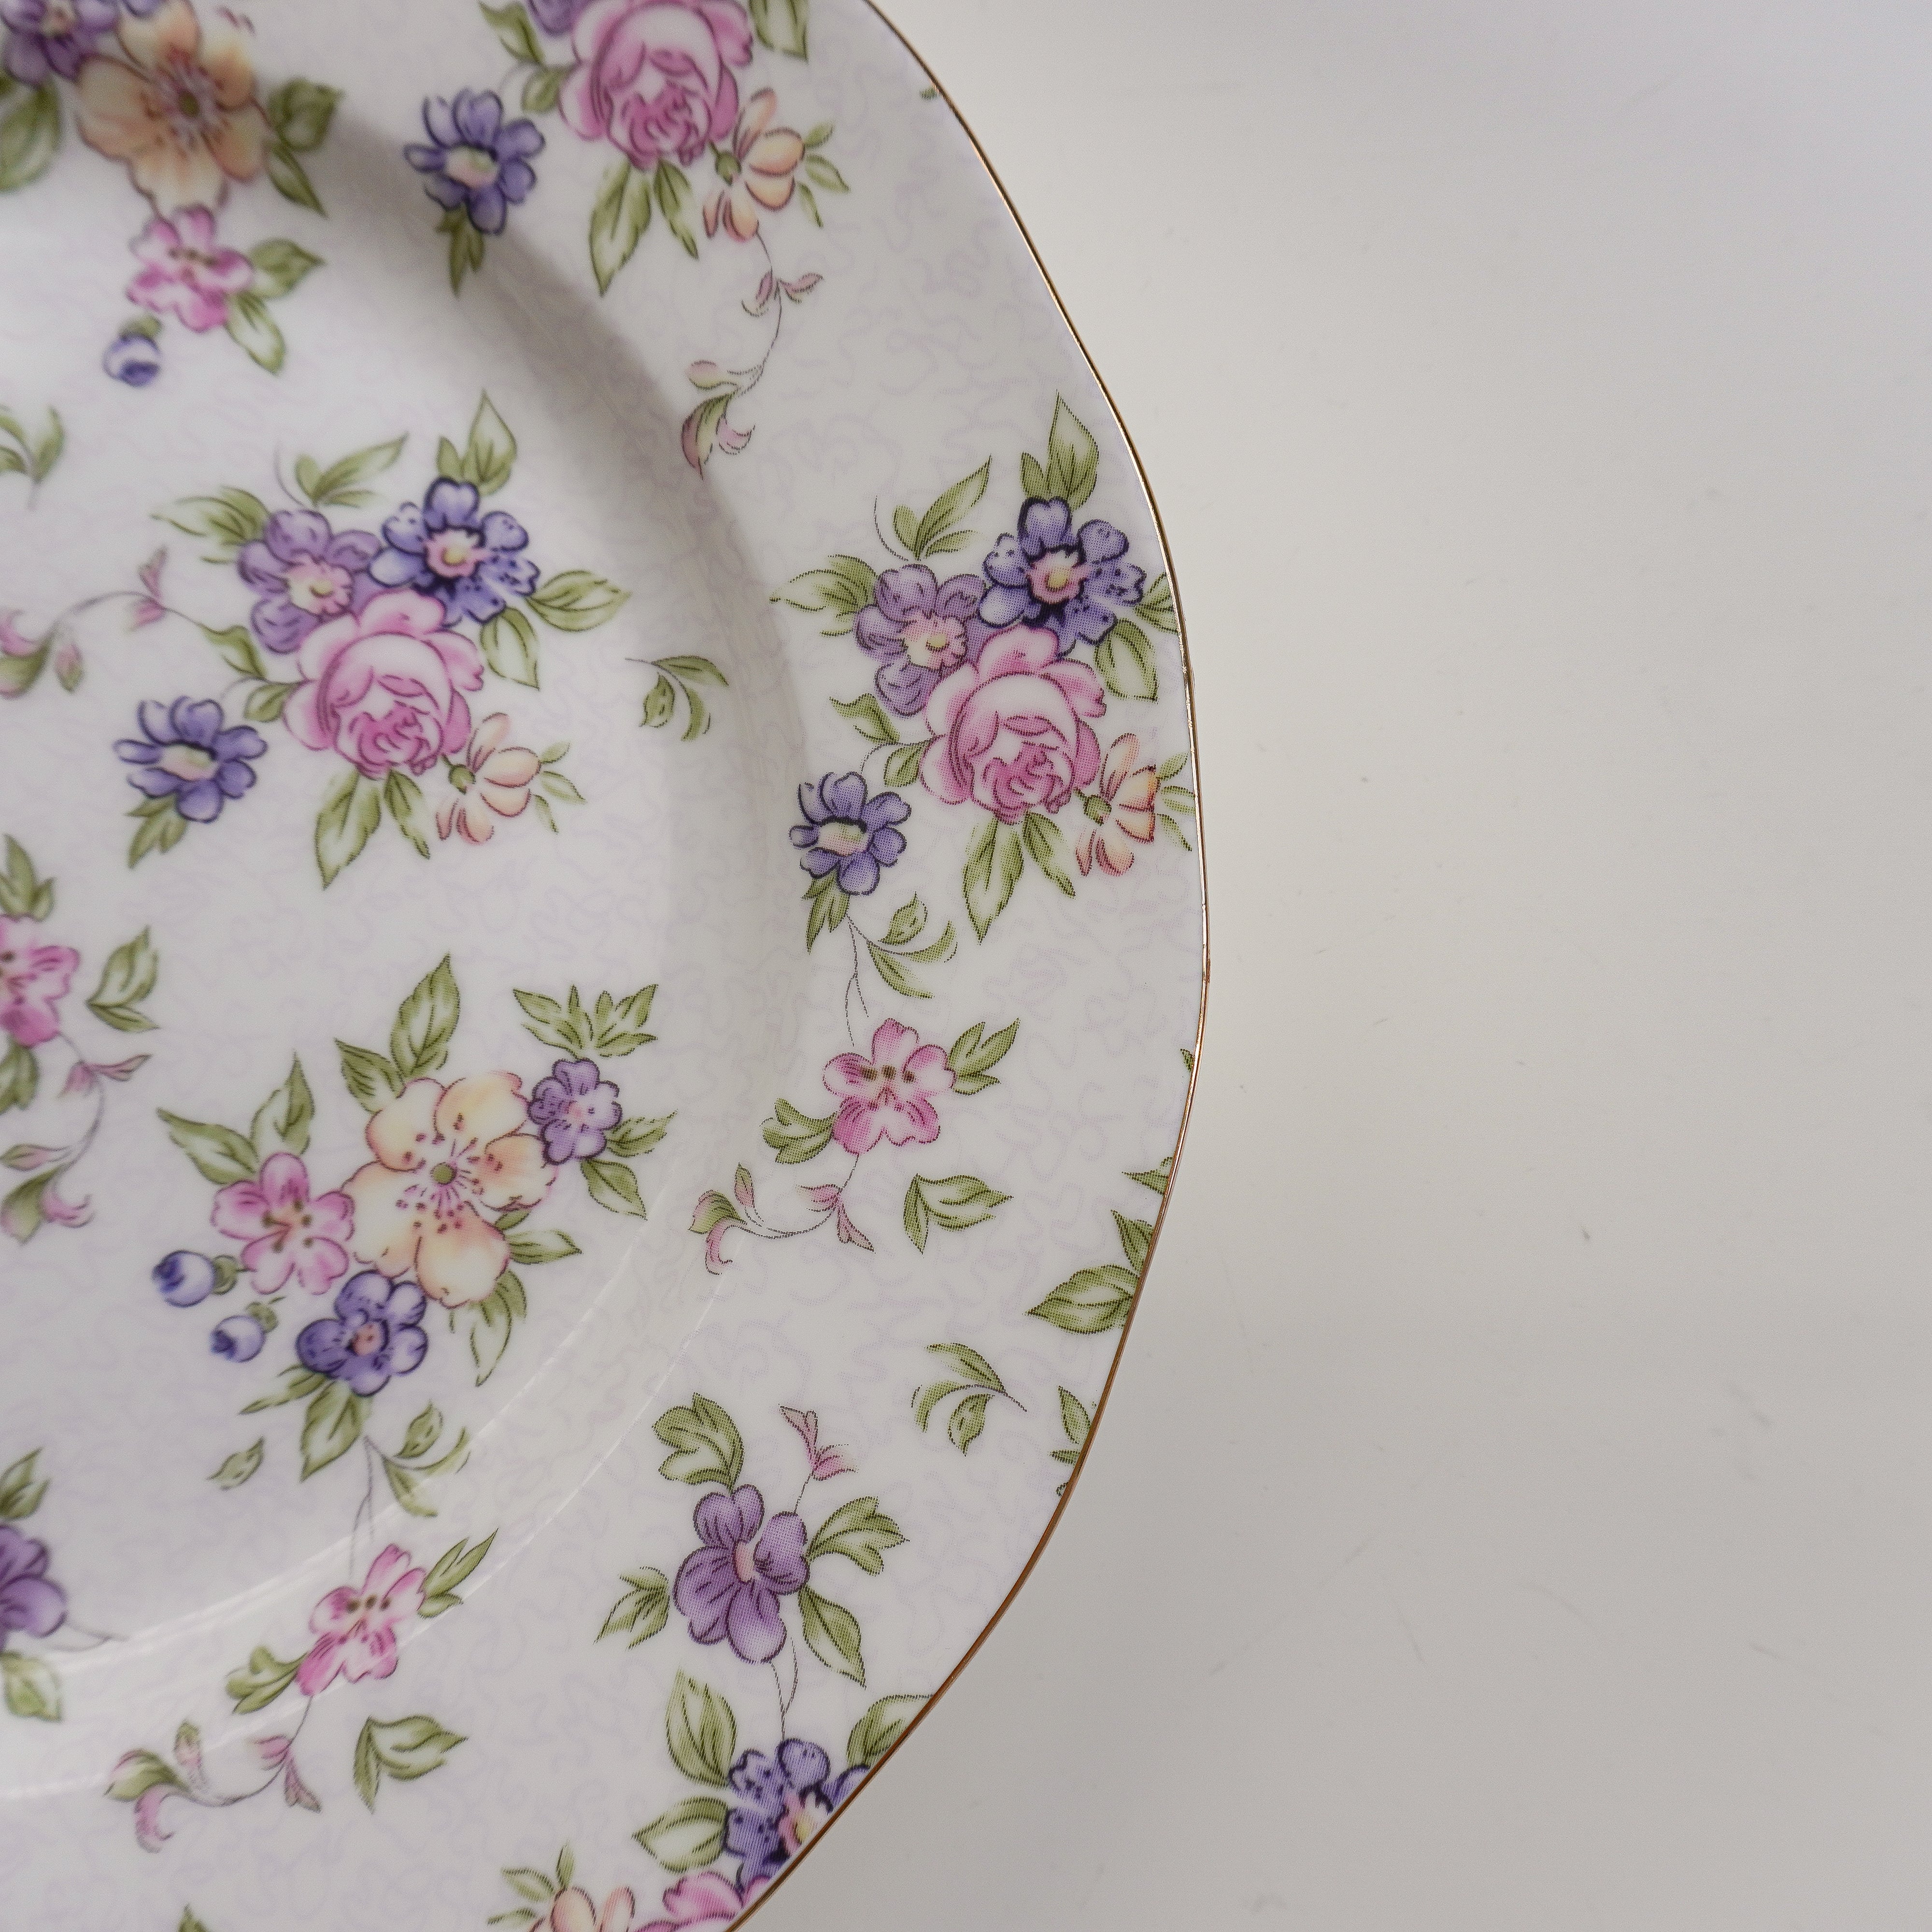 Lilac Floral Dessert Plate - LM